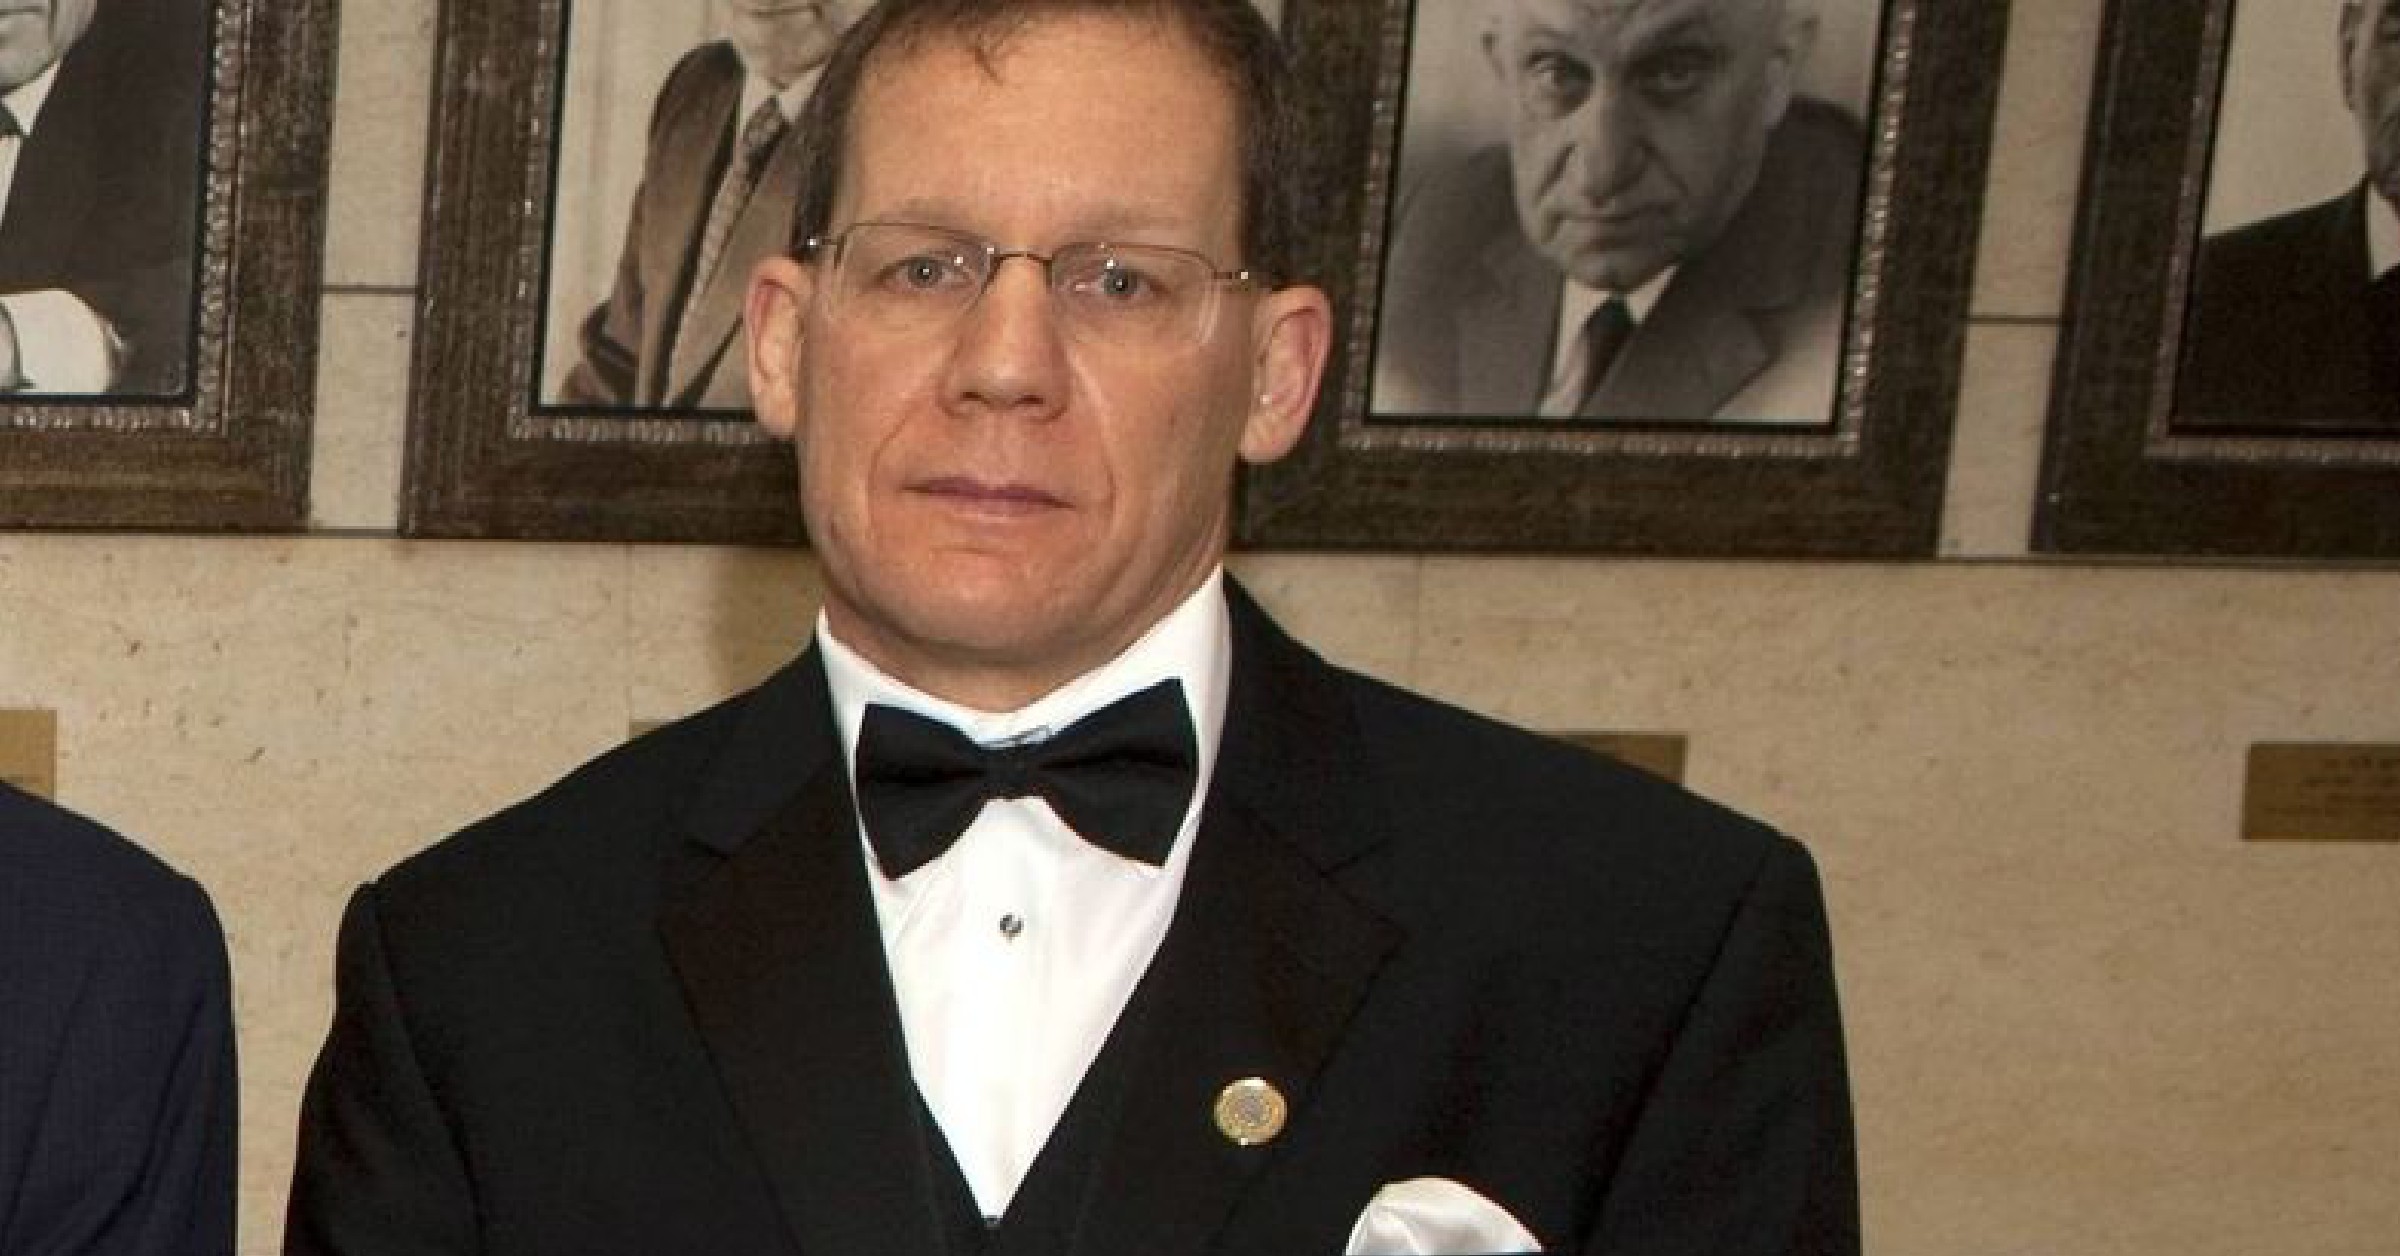 Man dressed in tuxedo, wearing glasses